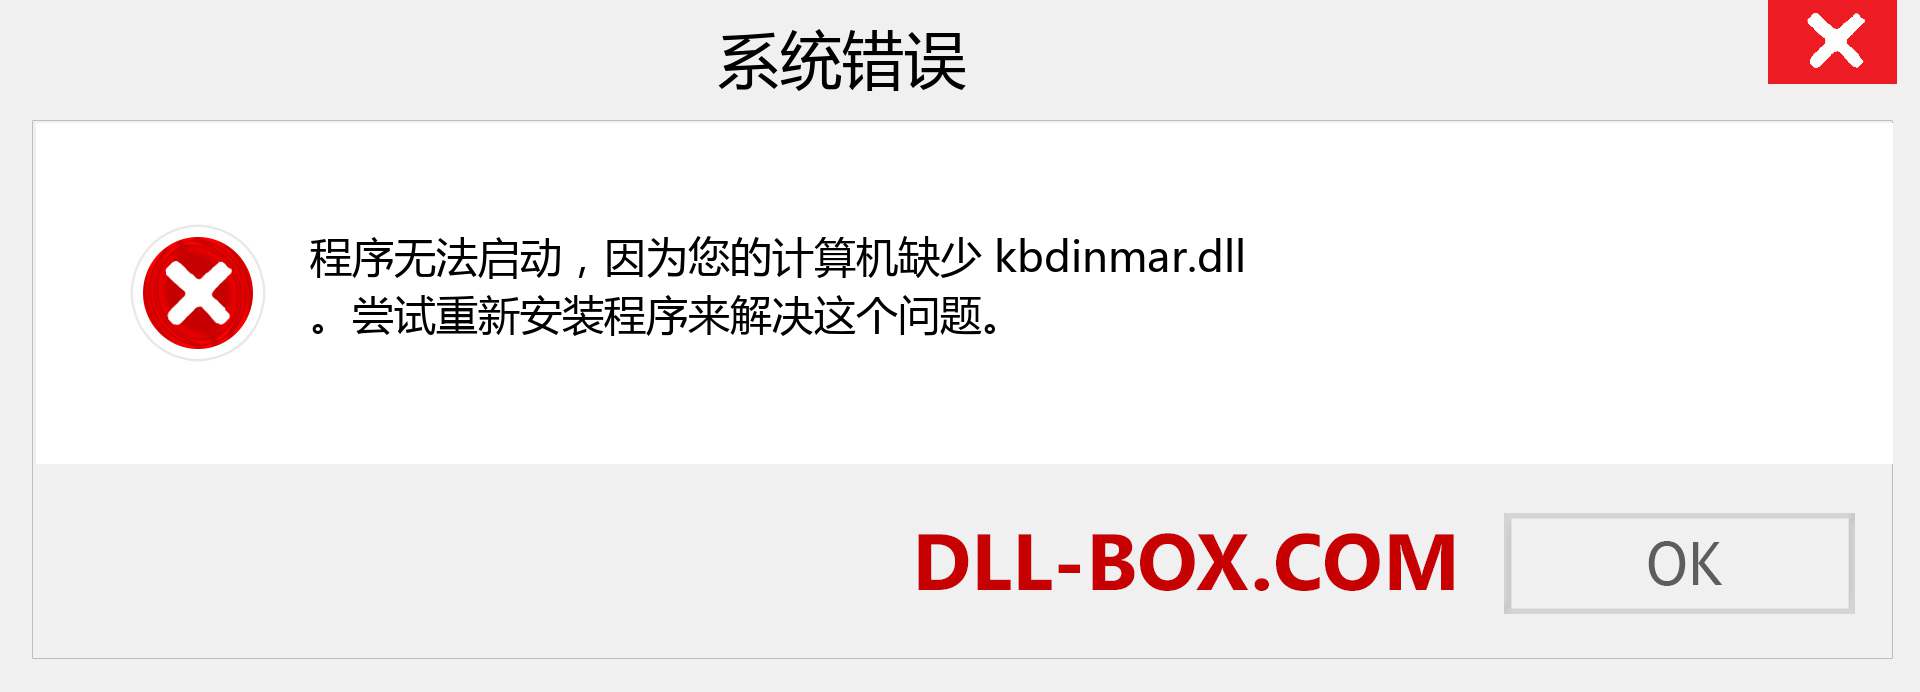 kbdinmar.dll 文件丢失？。 适用于 Windows 7、8、10 的下载 - 修复 Windows、照片、图像上的 kbdinmar dll 丢失错误